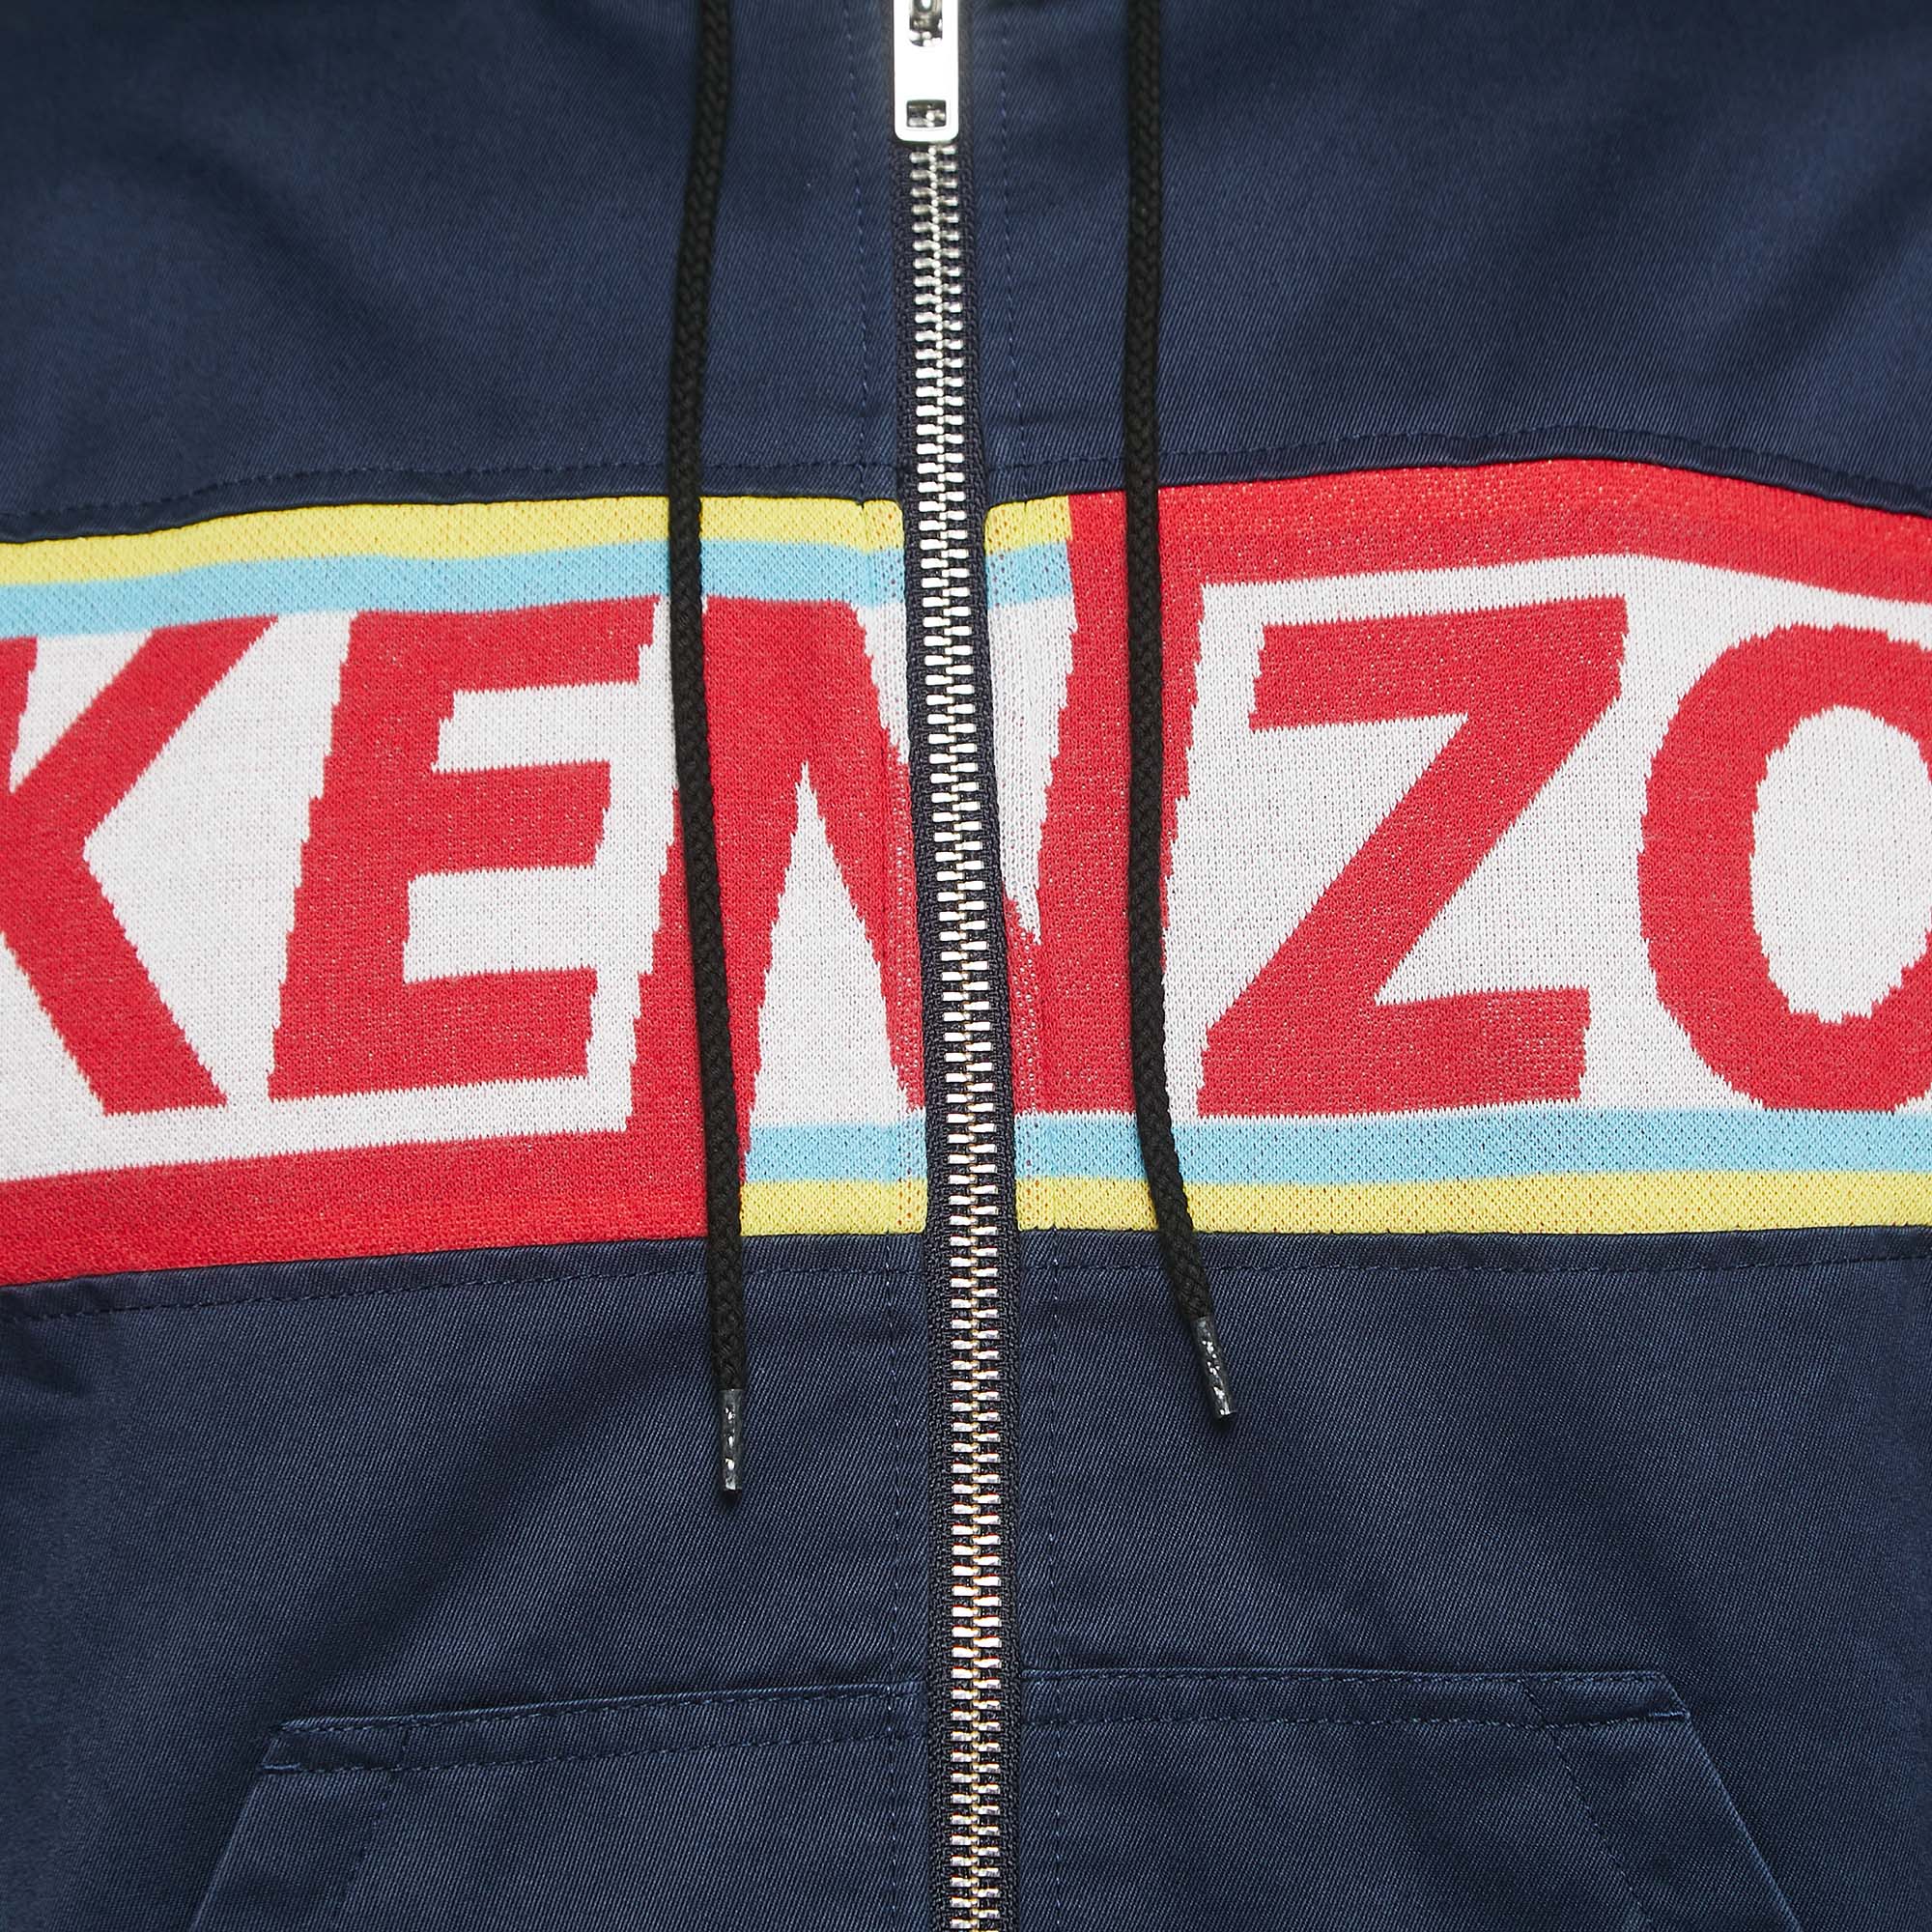 Kenzo Navy Blue Gabardine Logo Detailed Zip Front Hooded Jacket S